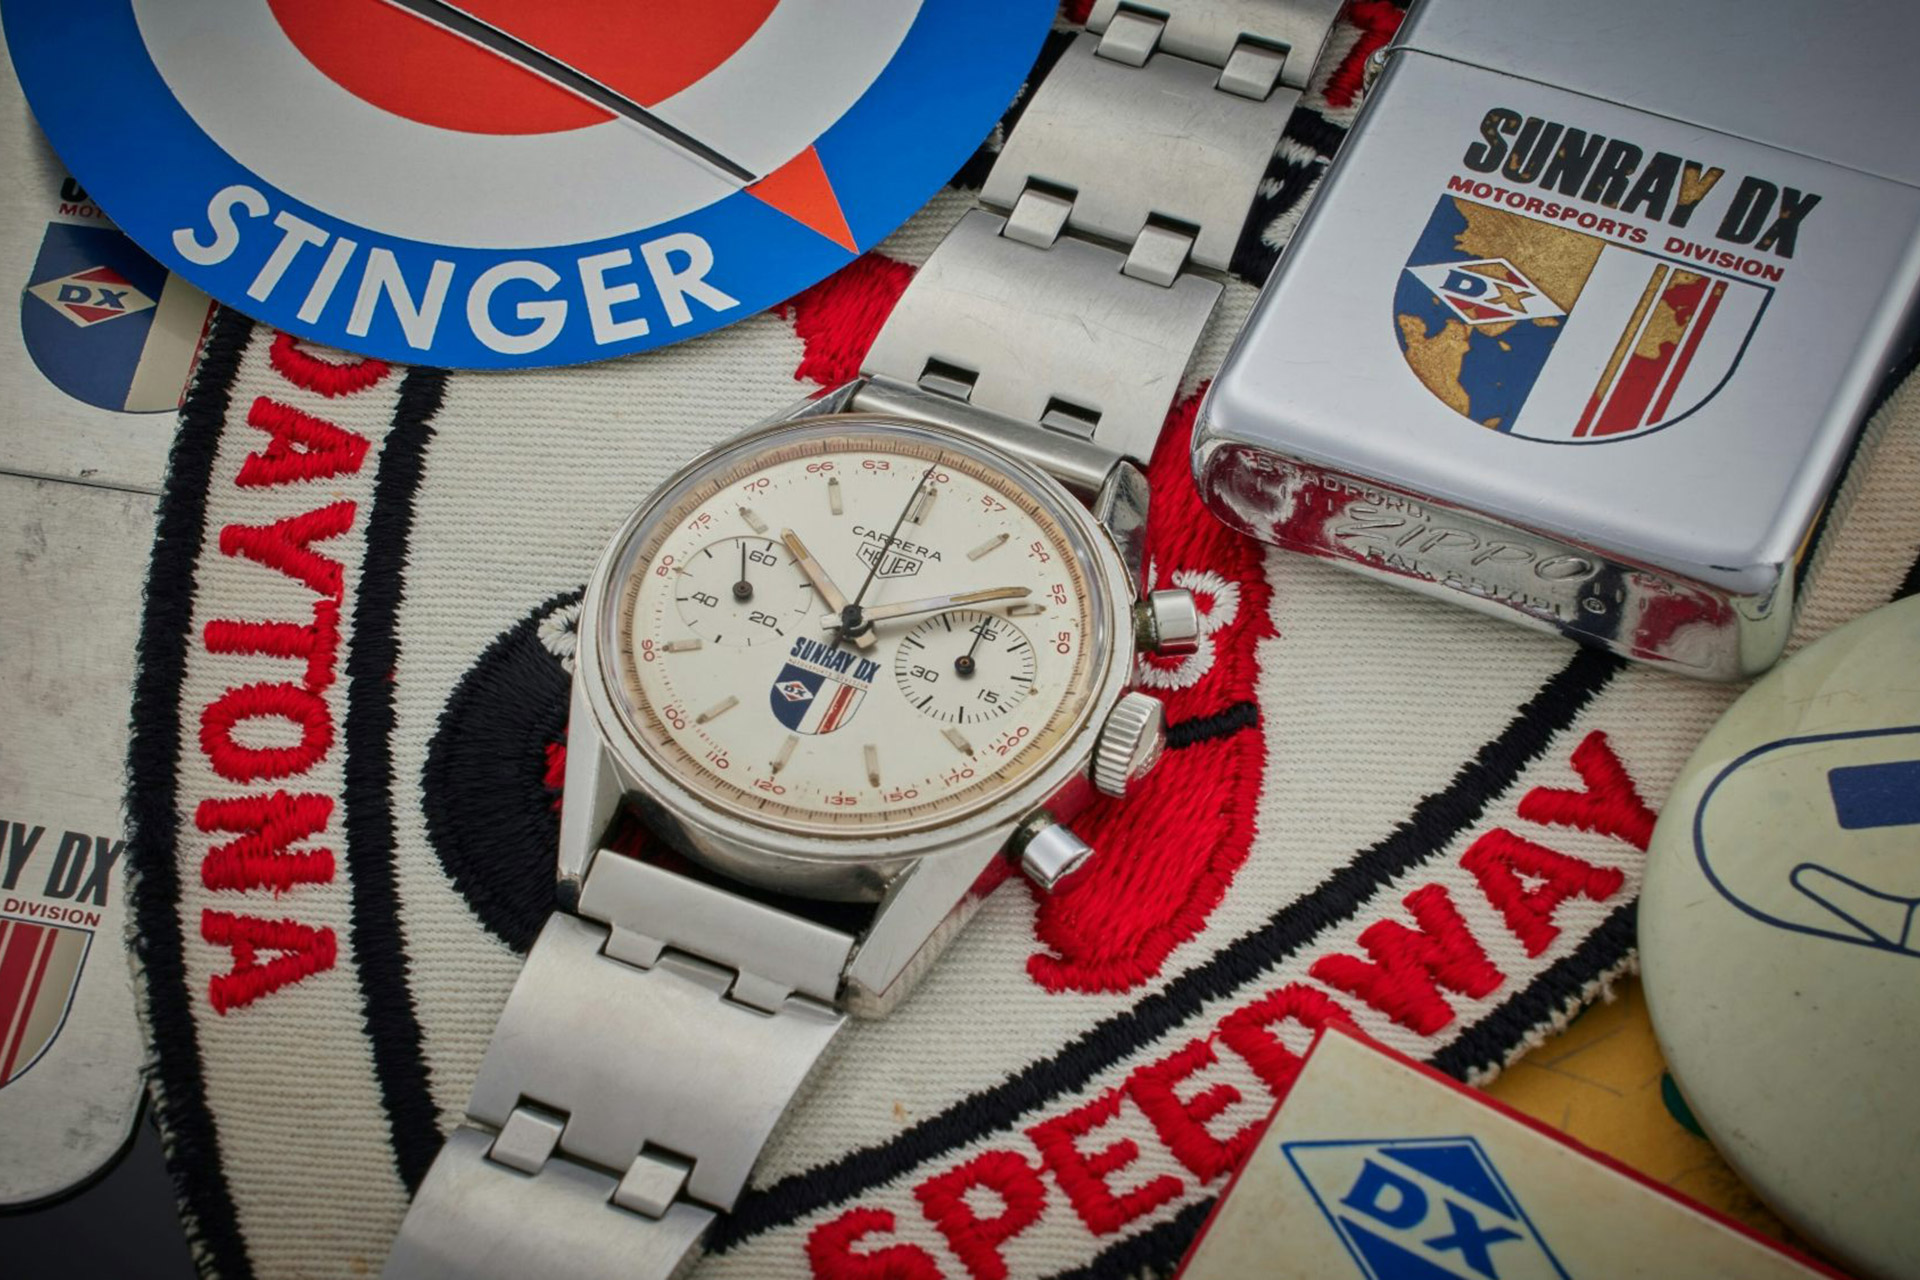 1967 Heuer Carrera Sunray DX Watch